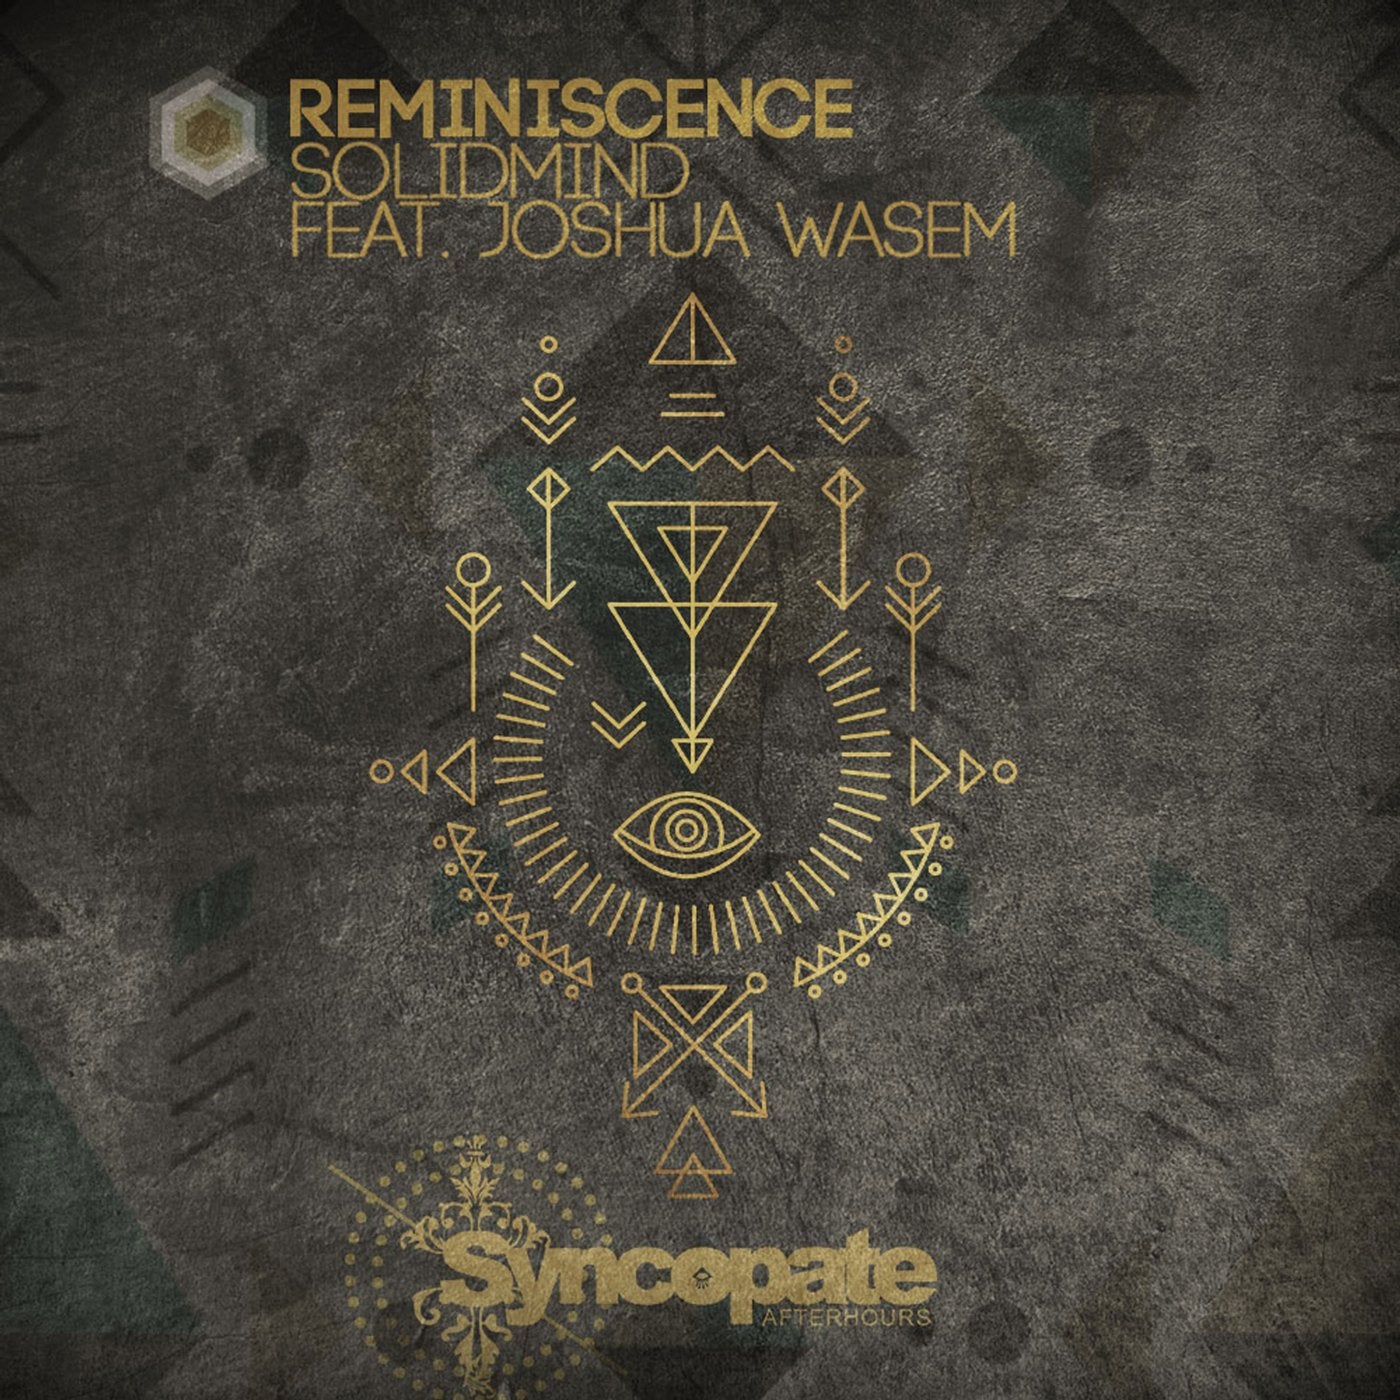 Reminiscence (feat. Joshua Wasem)